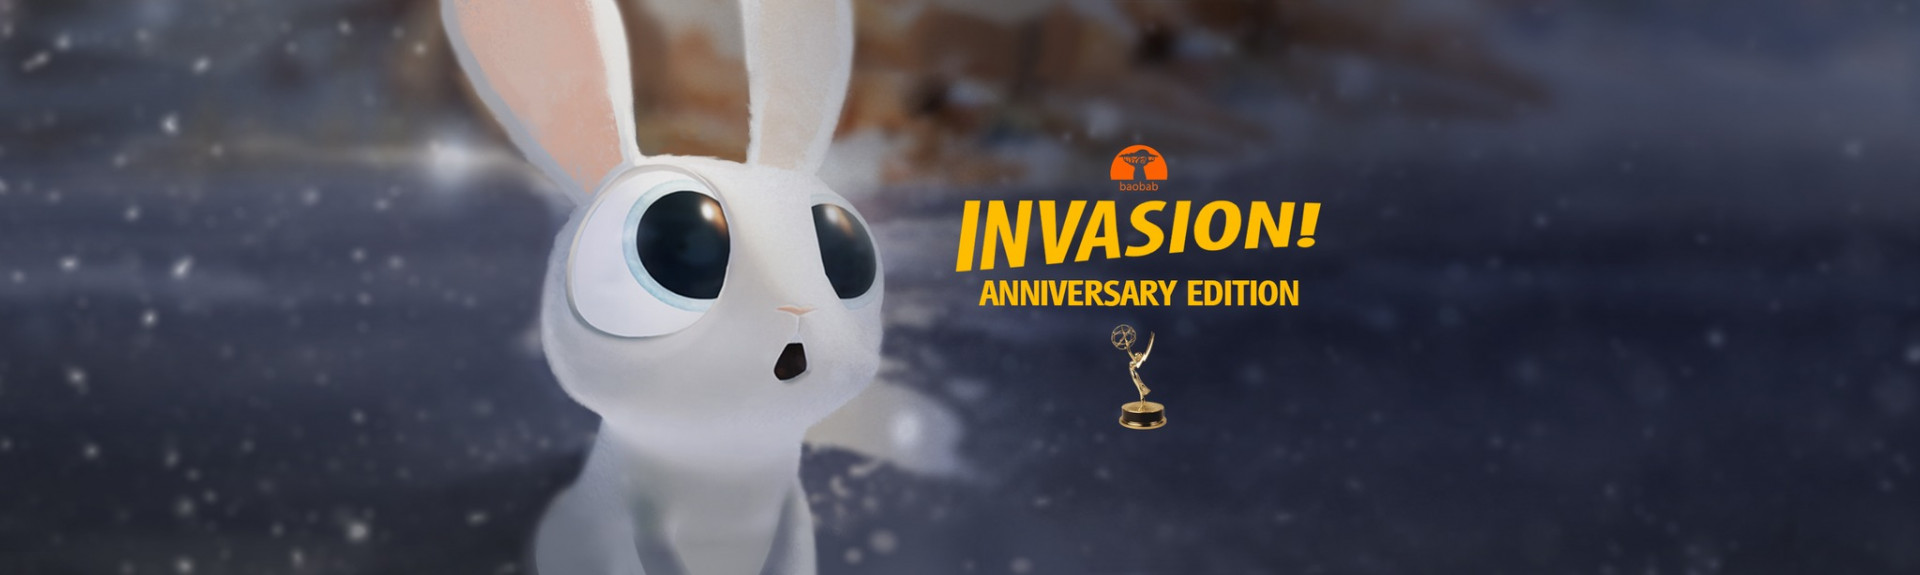 INVASION! Anniversary Edition